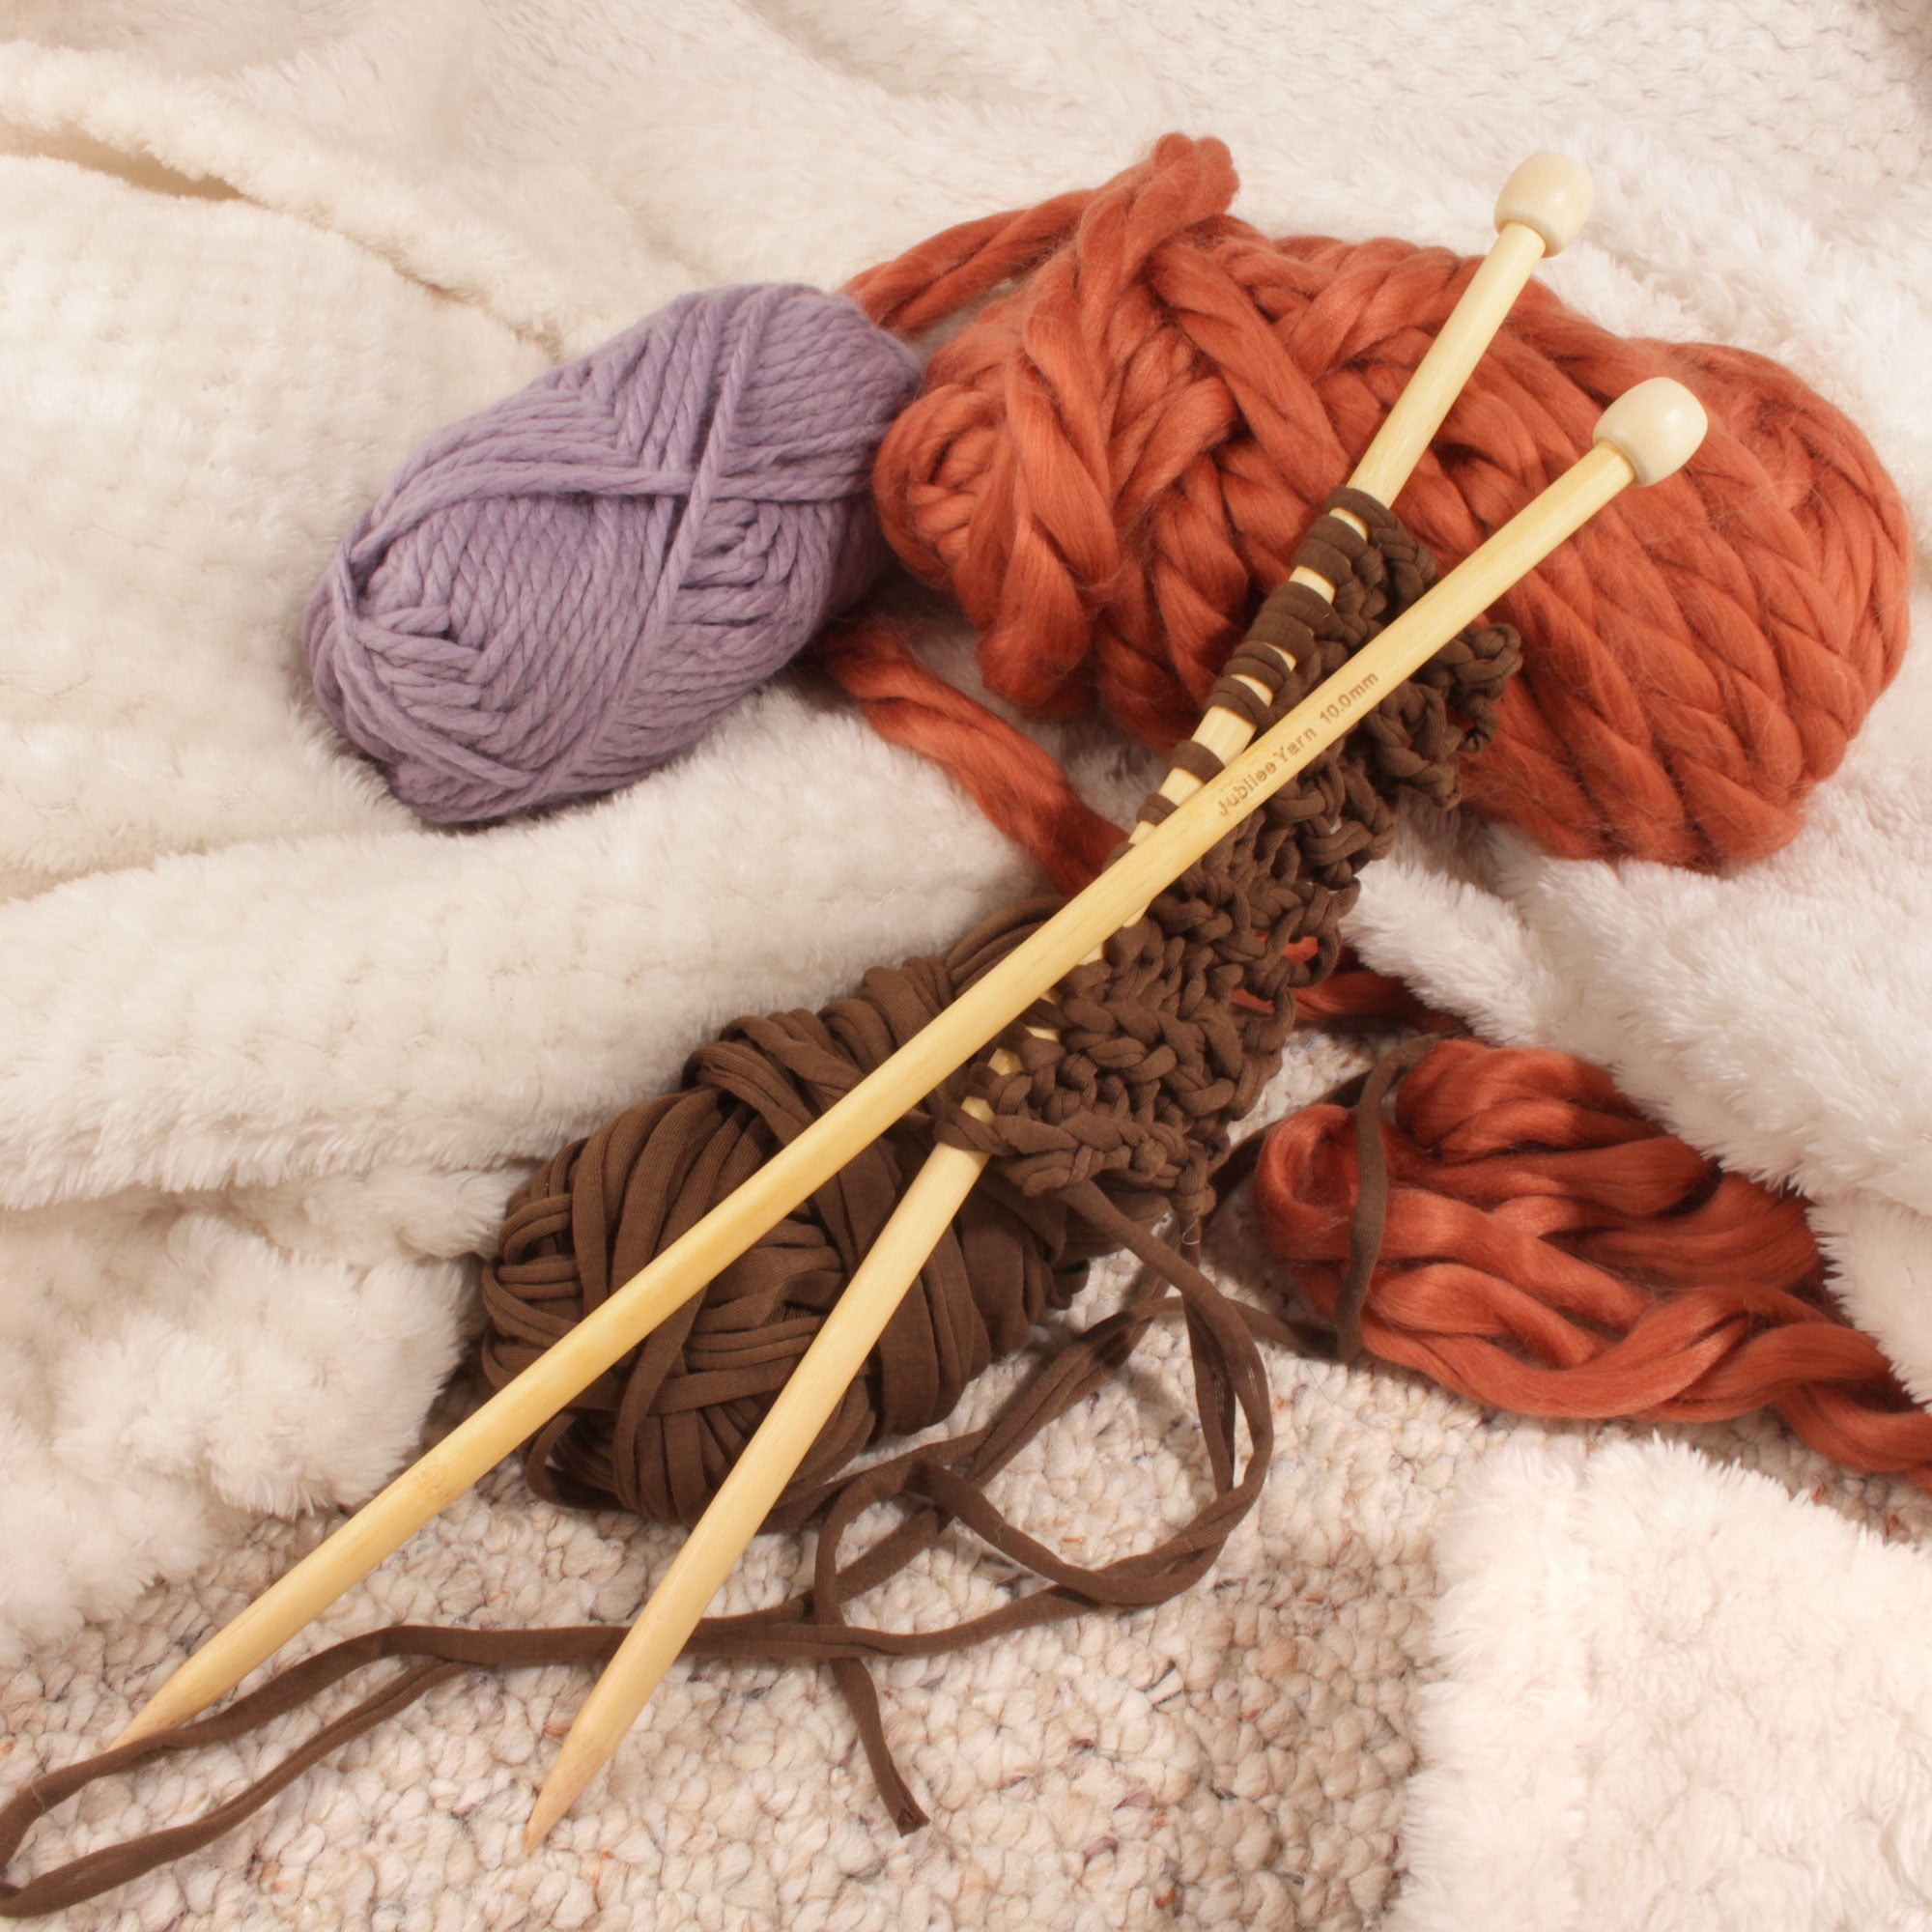 JubileeYarn Jumbo Bamboo Knitting Needles - 3 Pair Deluxe Set - 15mm, 20mm, 25mm